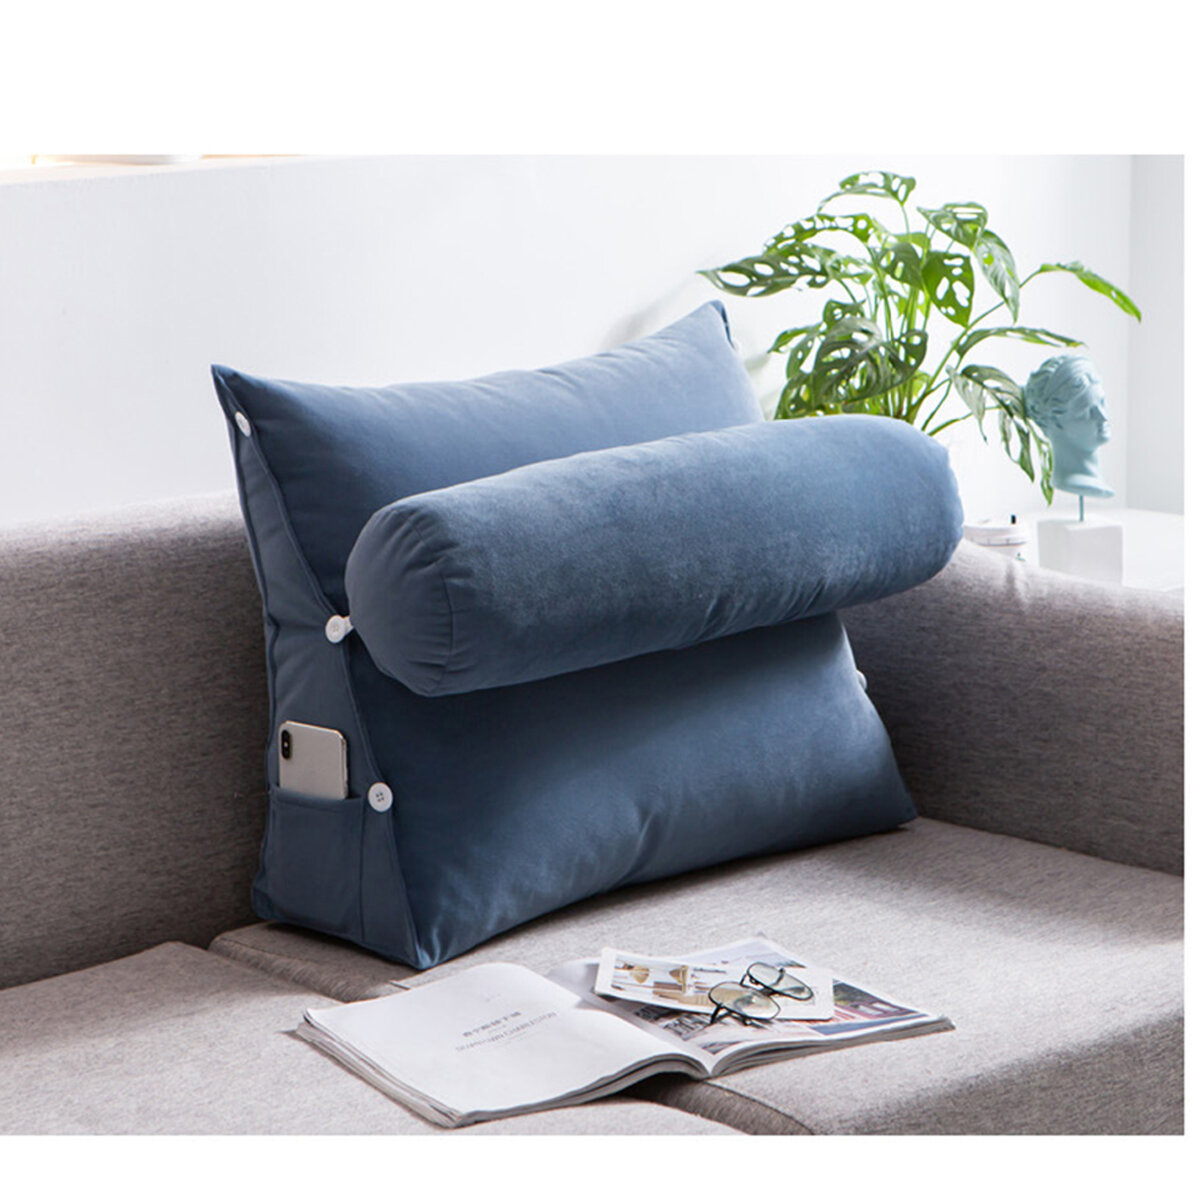 

Lumbar Pillow Big Backrest Reading Rest Pillow Lumbar Support Chair Cushion for Sofa Bed Lumbar Pillow